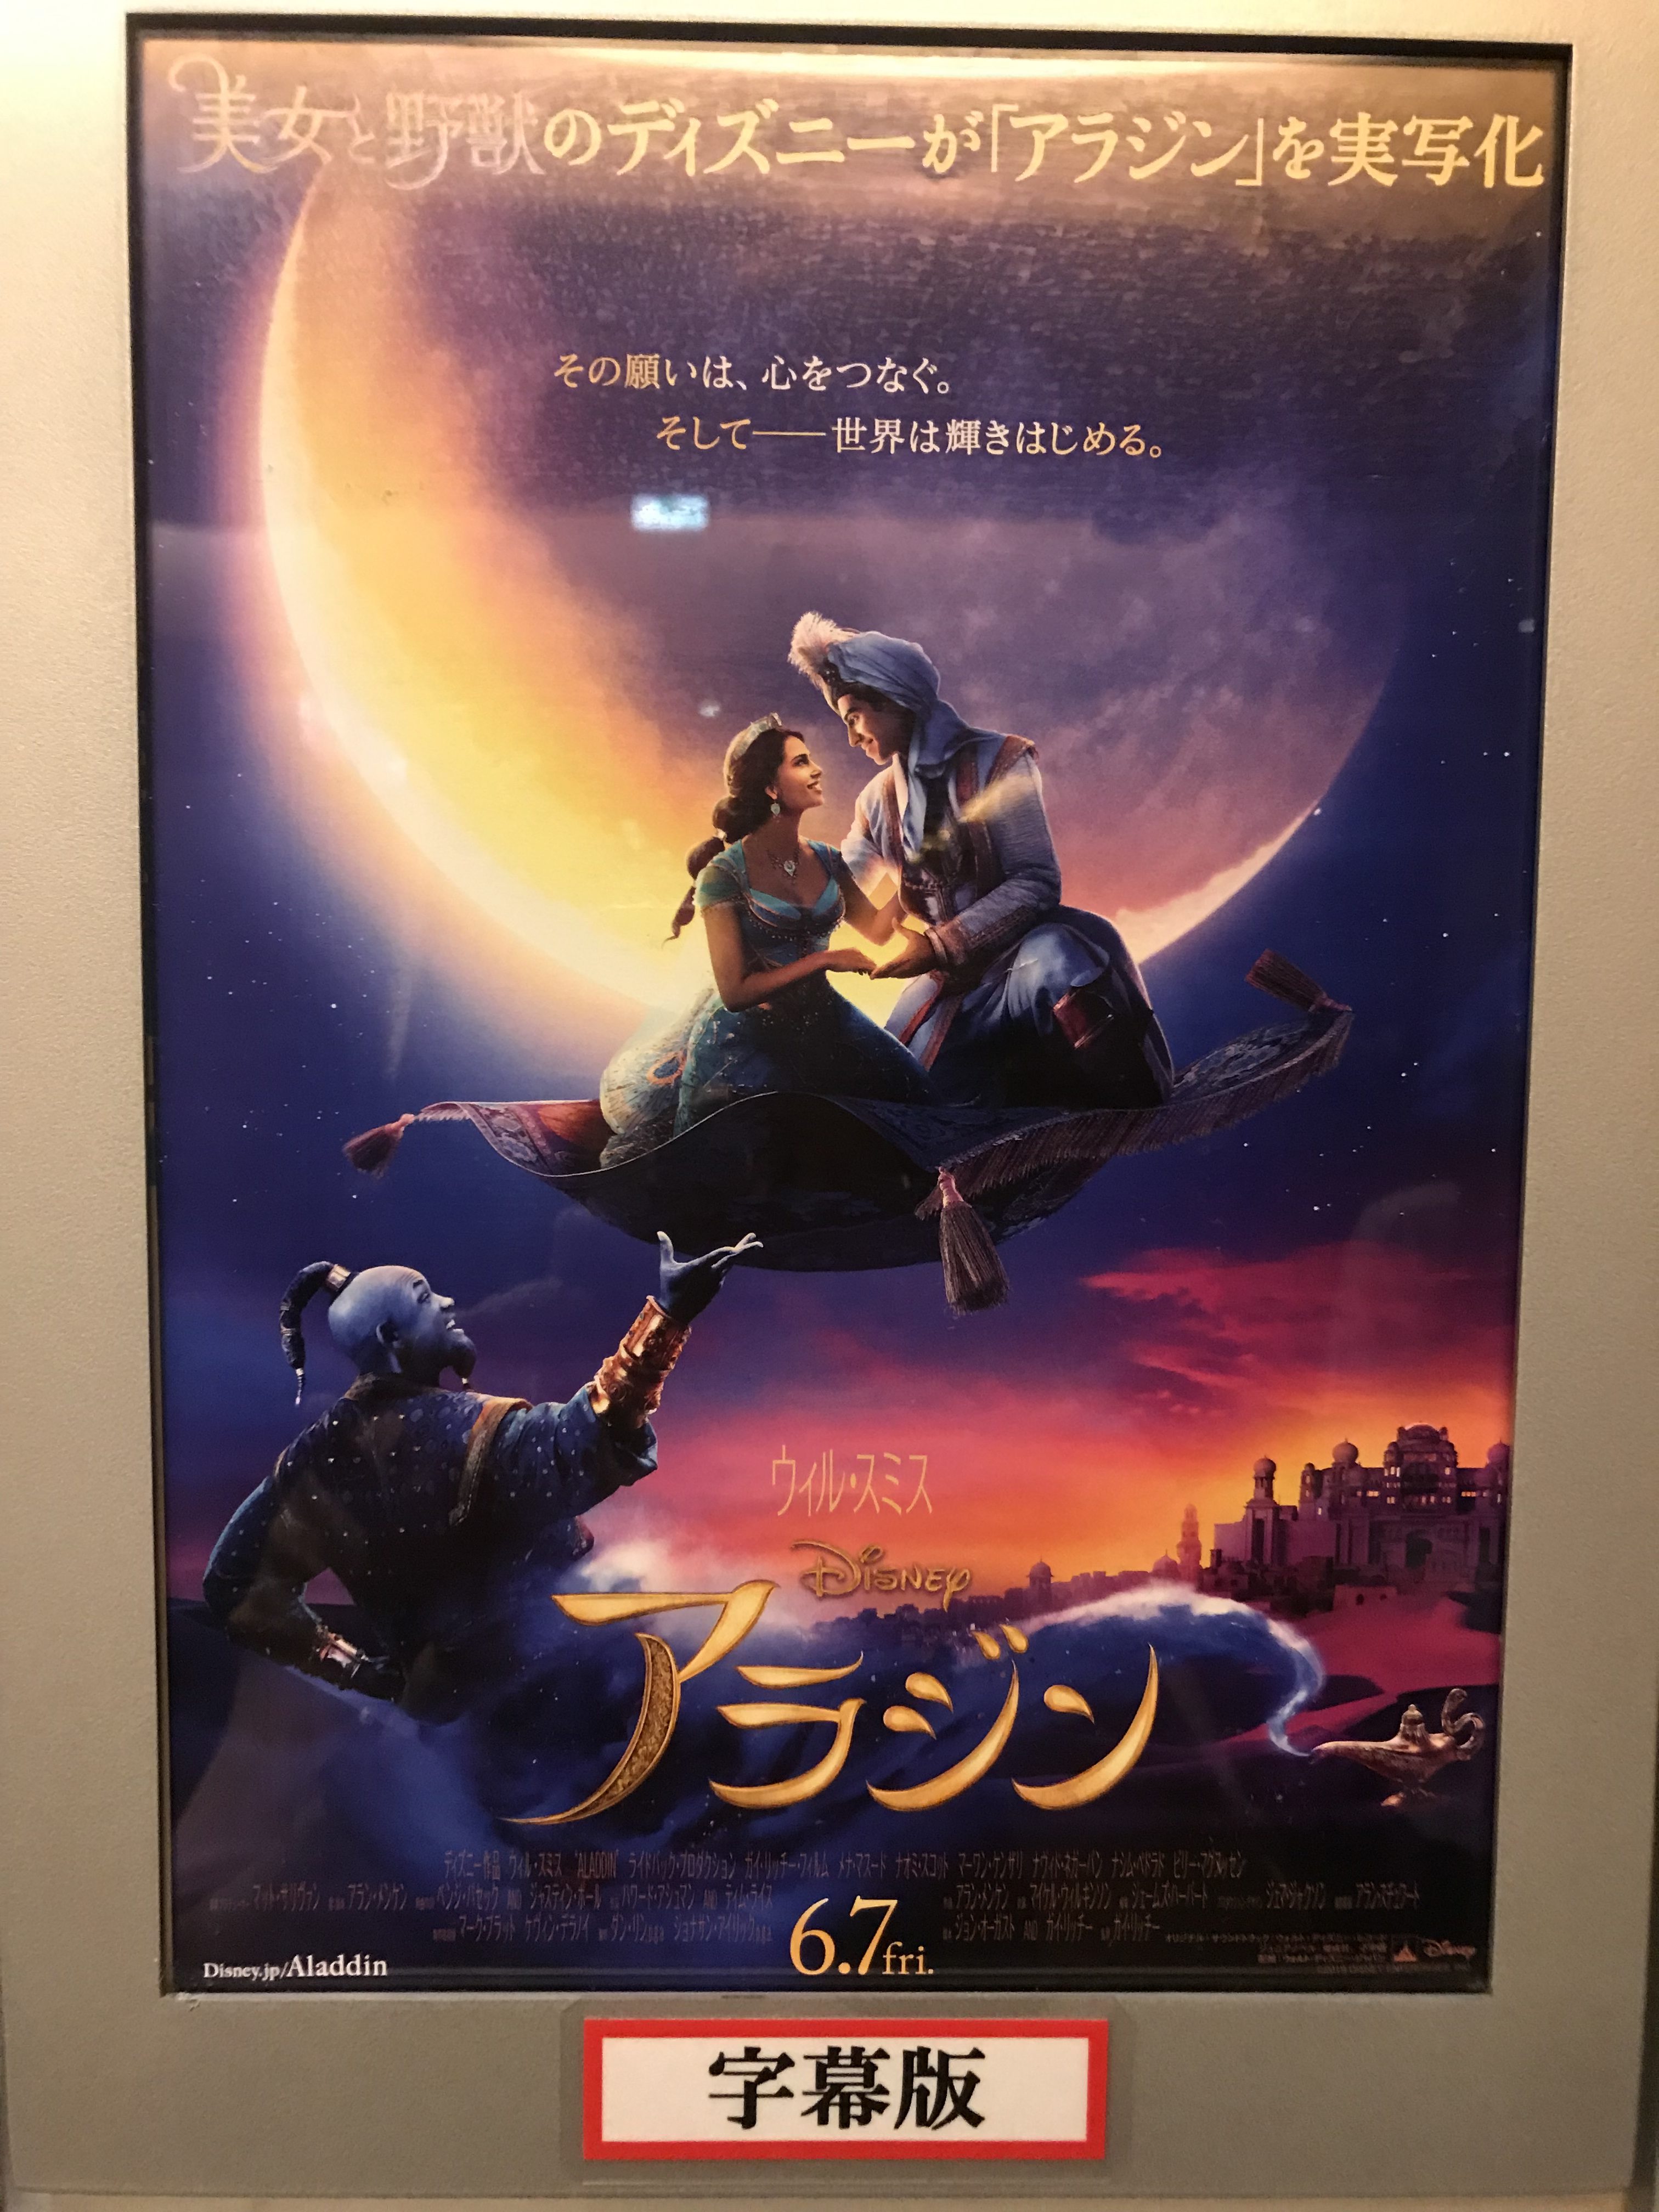 Aladdin_poster